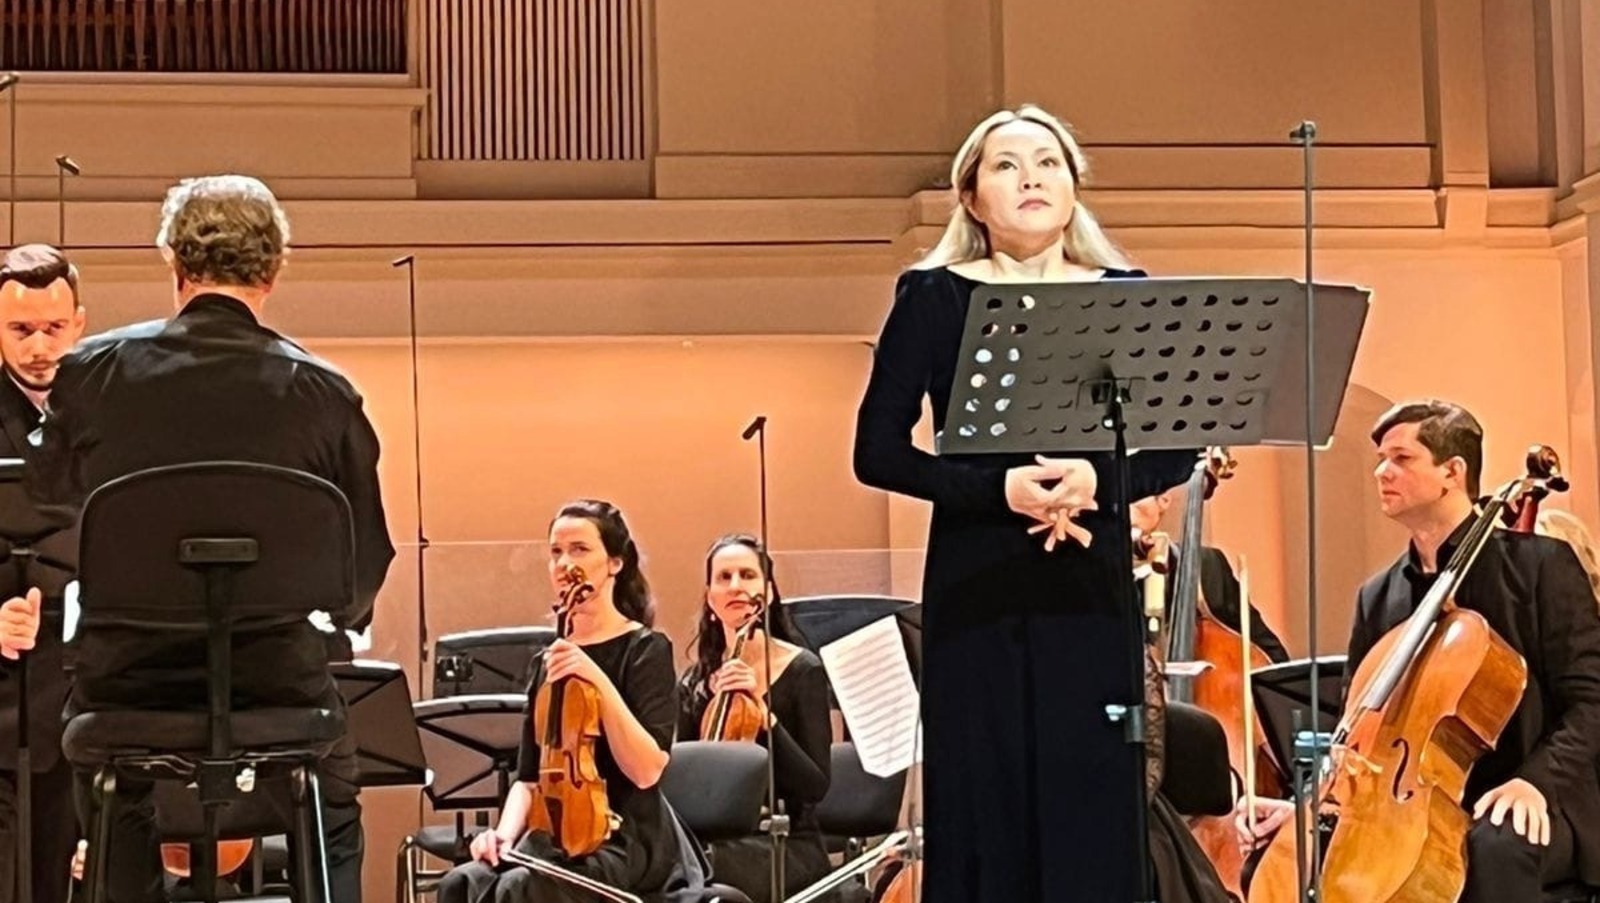 Диләрә Иҙрисова Мәскәүҙең төп концерт залында йырланы